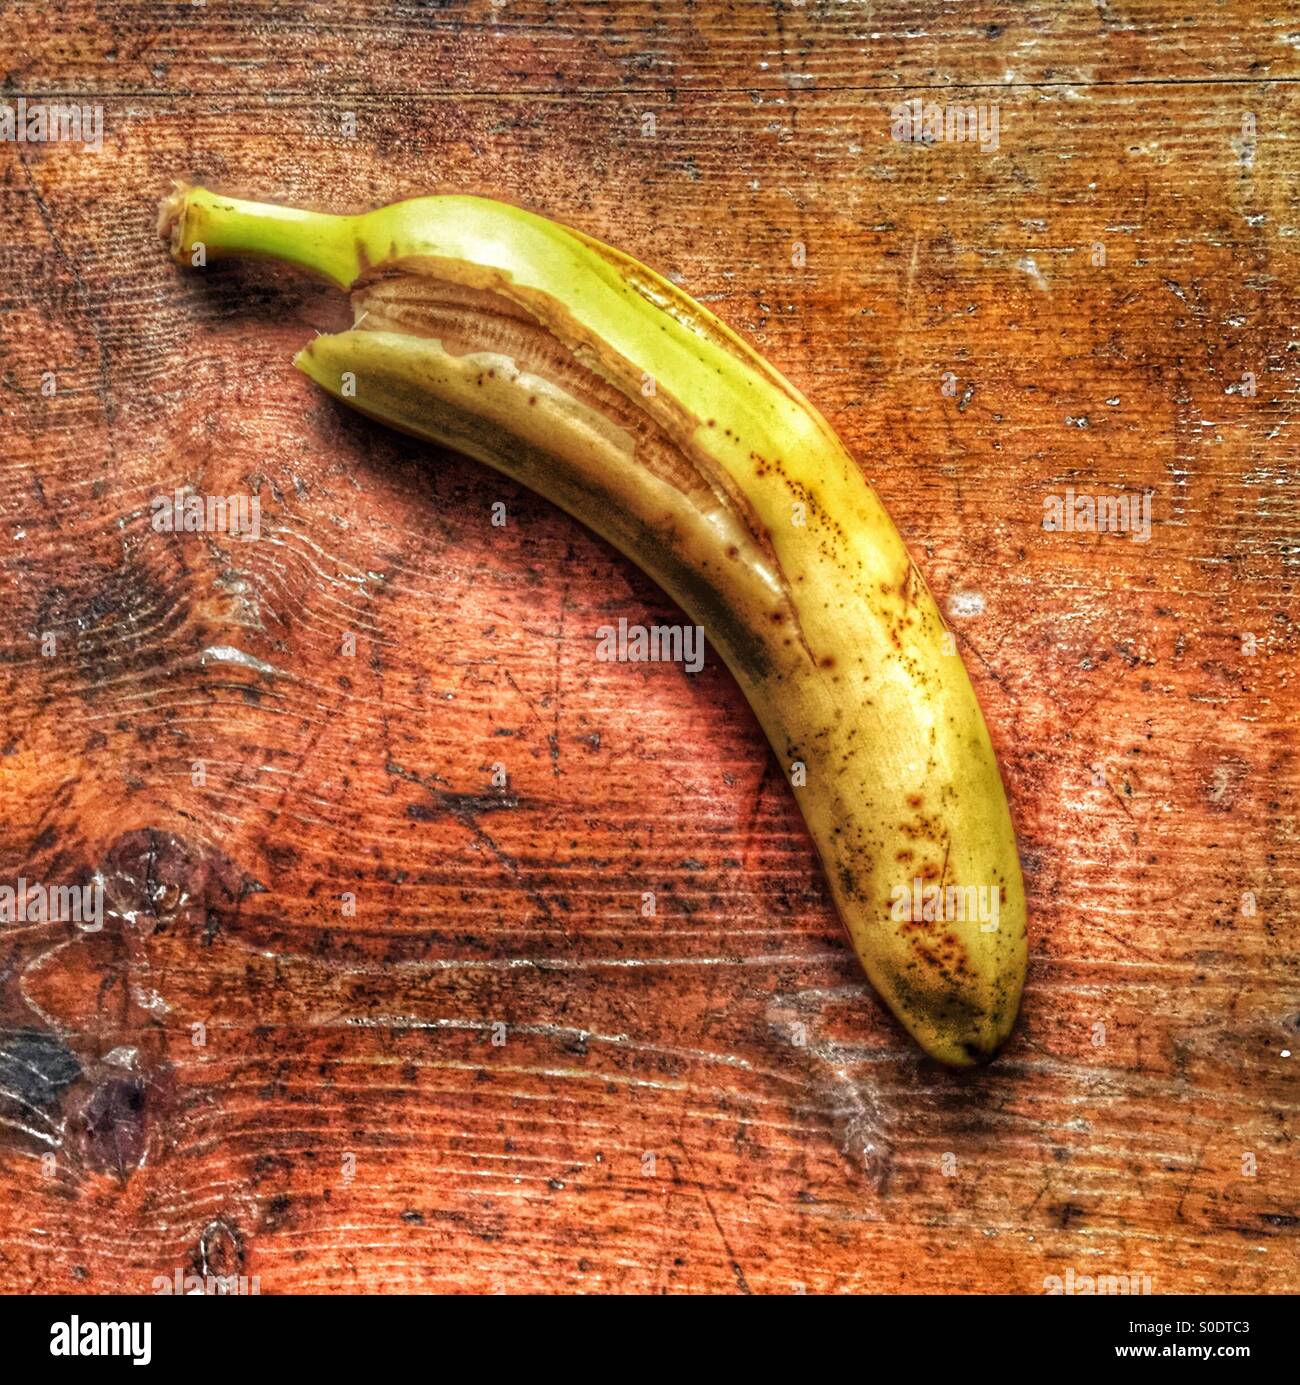 Eaten banana hdr Stock Photo